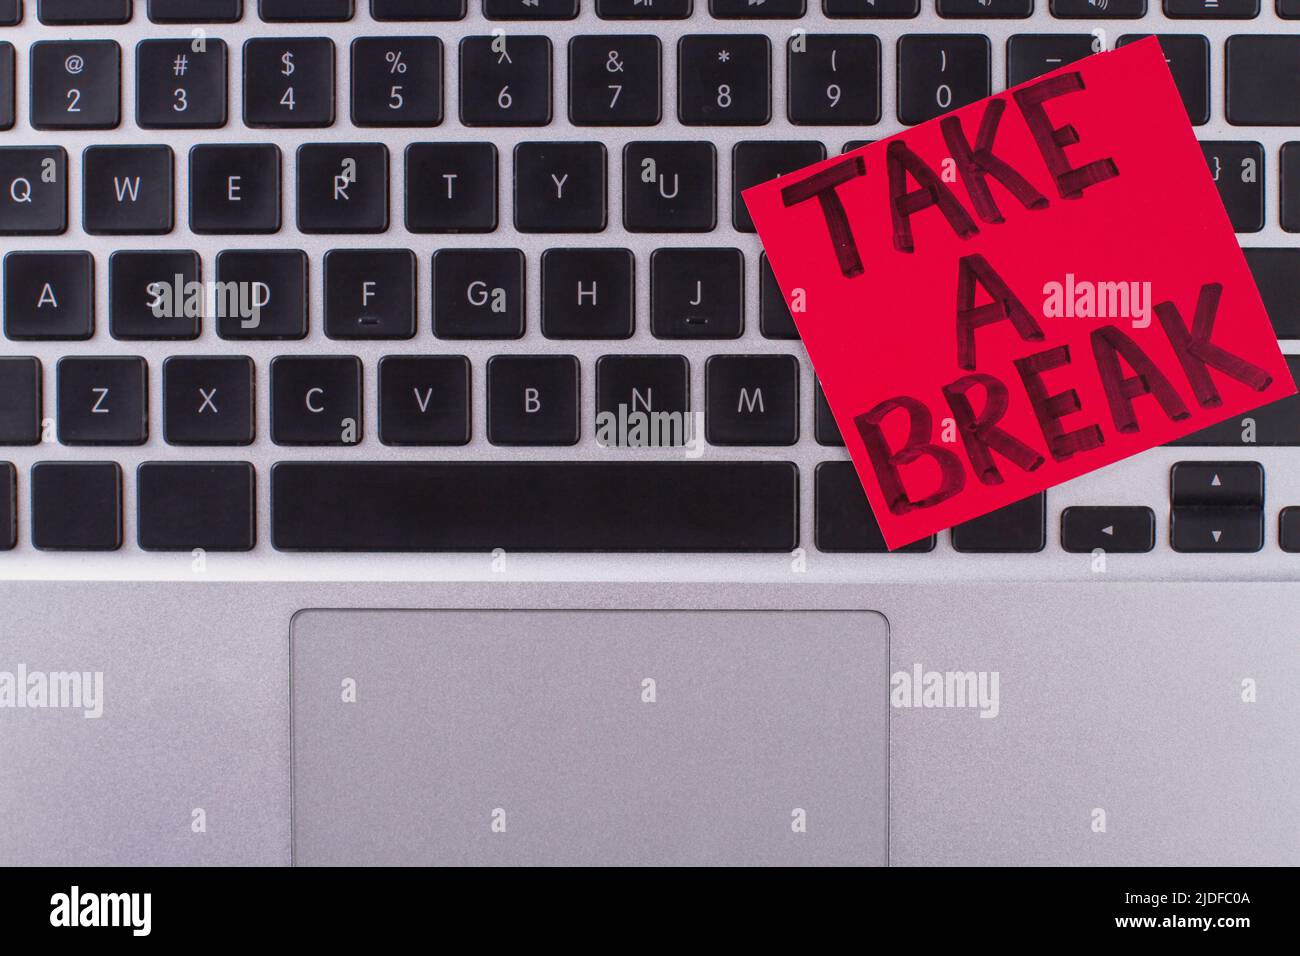 Sticker note on laptop keyboard saying take a break. Comfort work place. Stock Photo